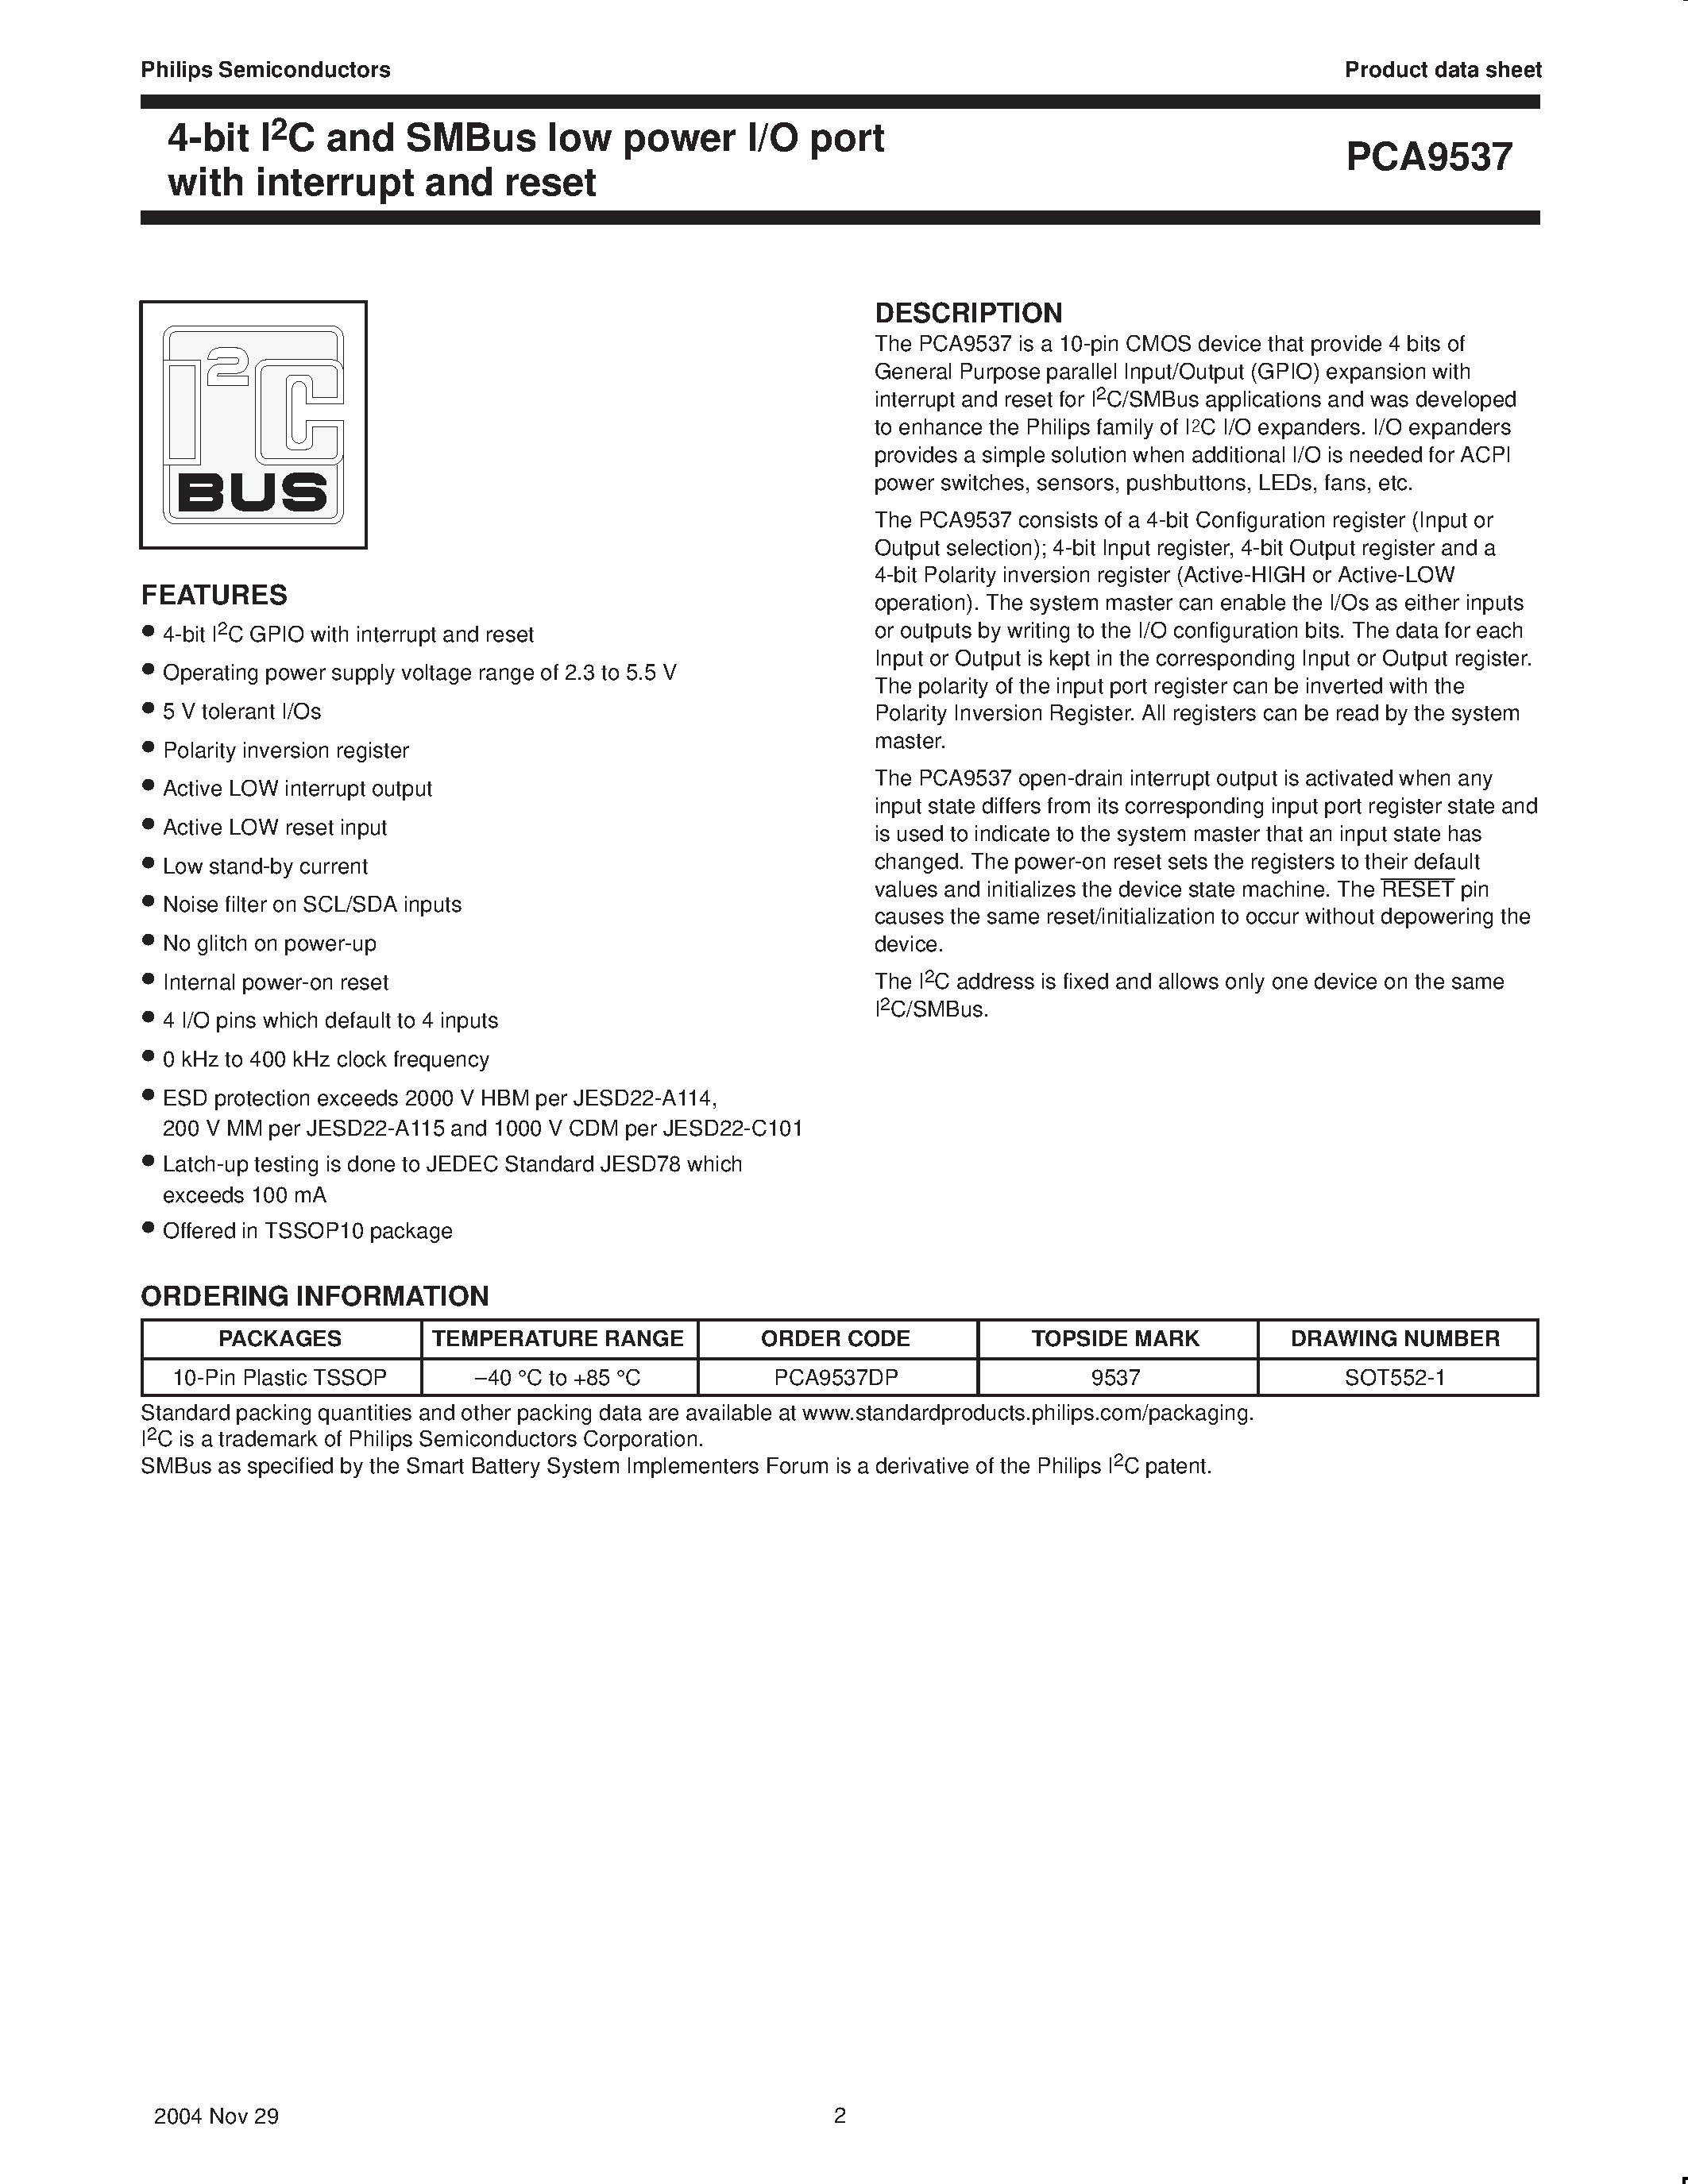 Datasheet PCA9537 - 4-bit I2C and SMBus low power I/O port page 2